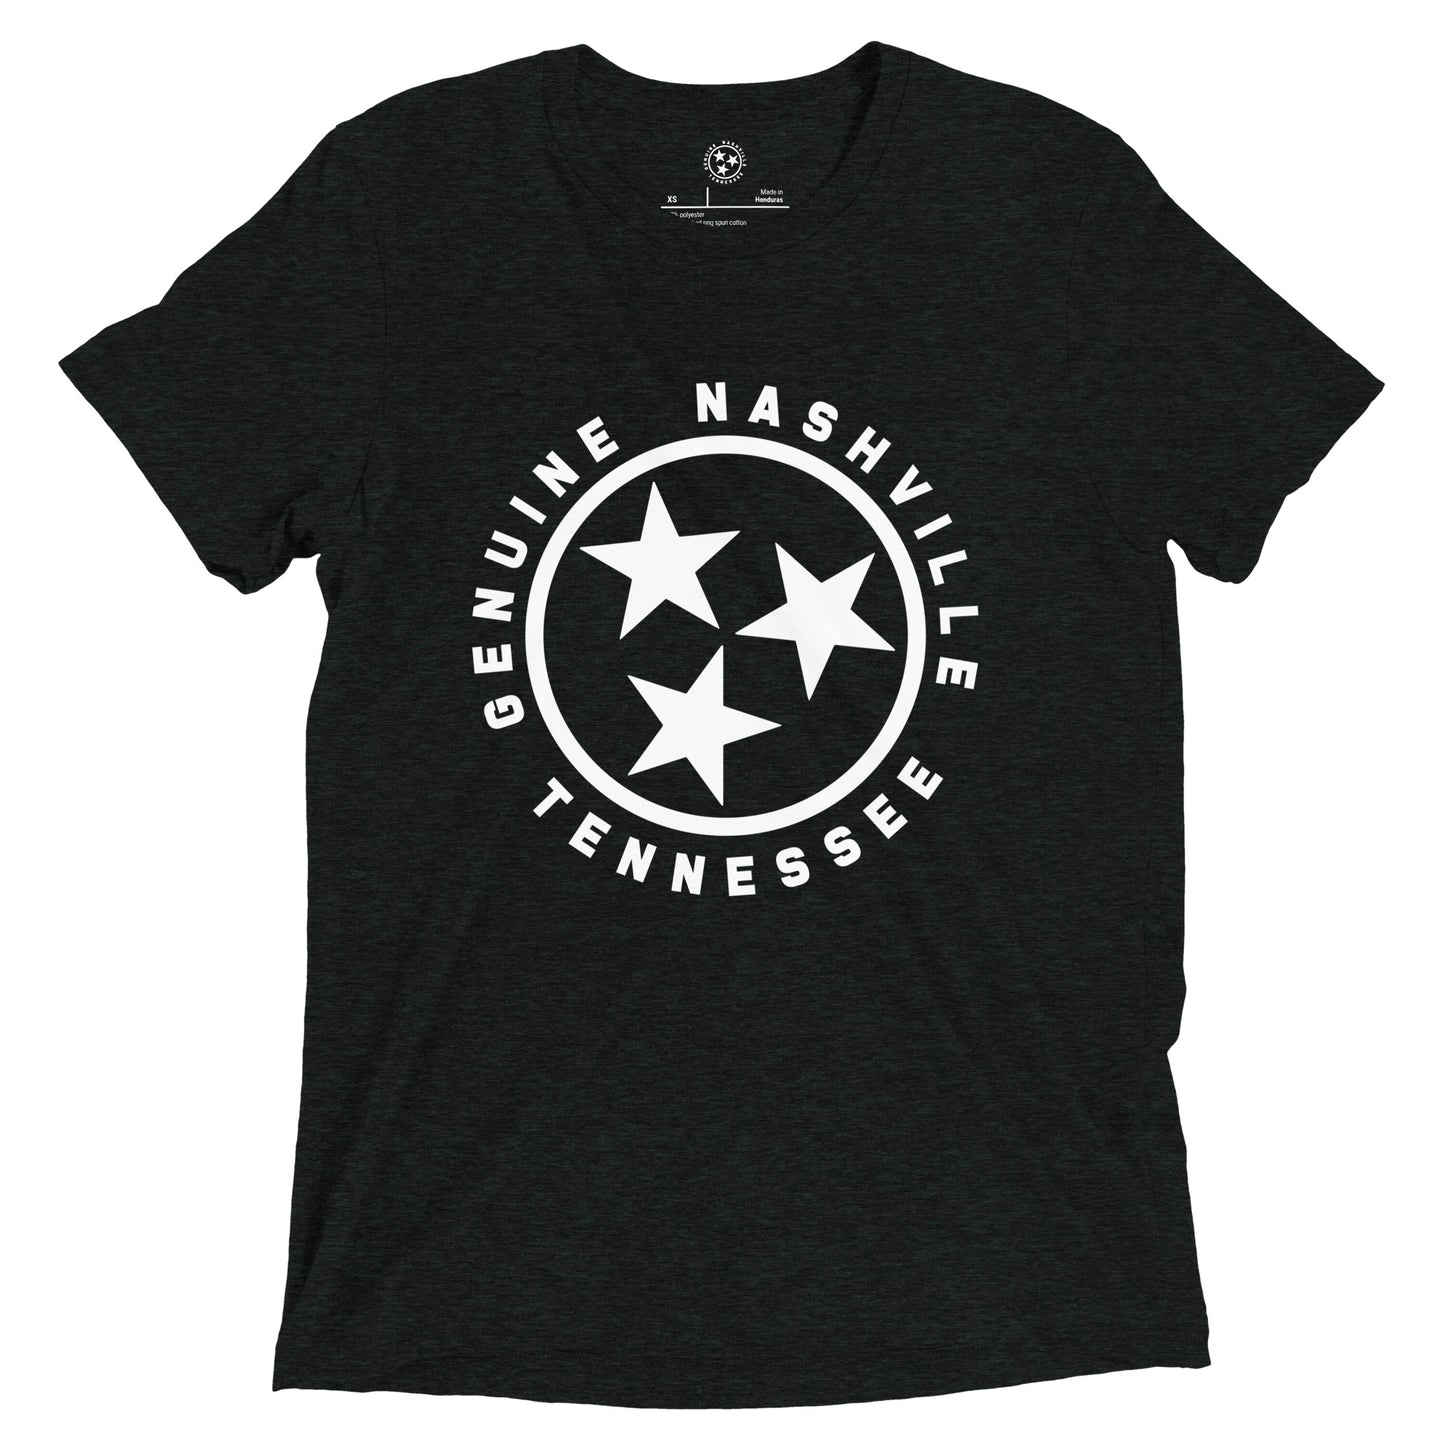 Genuine Nashville Classic T-Shirt